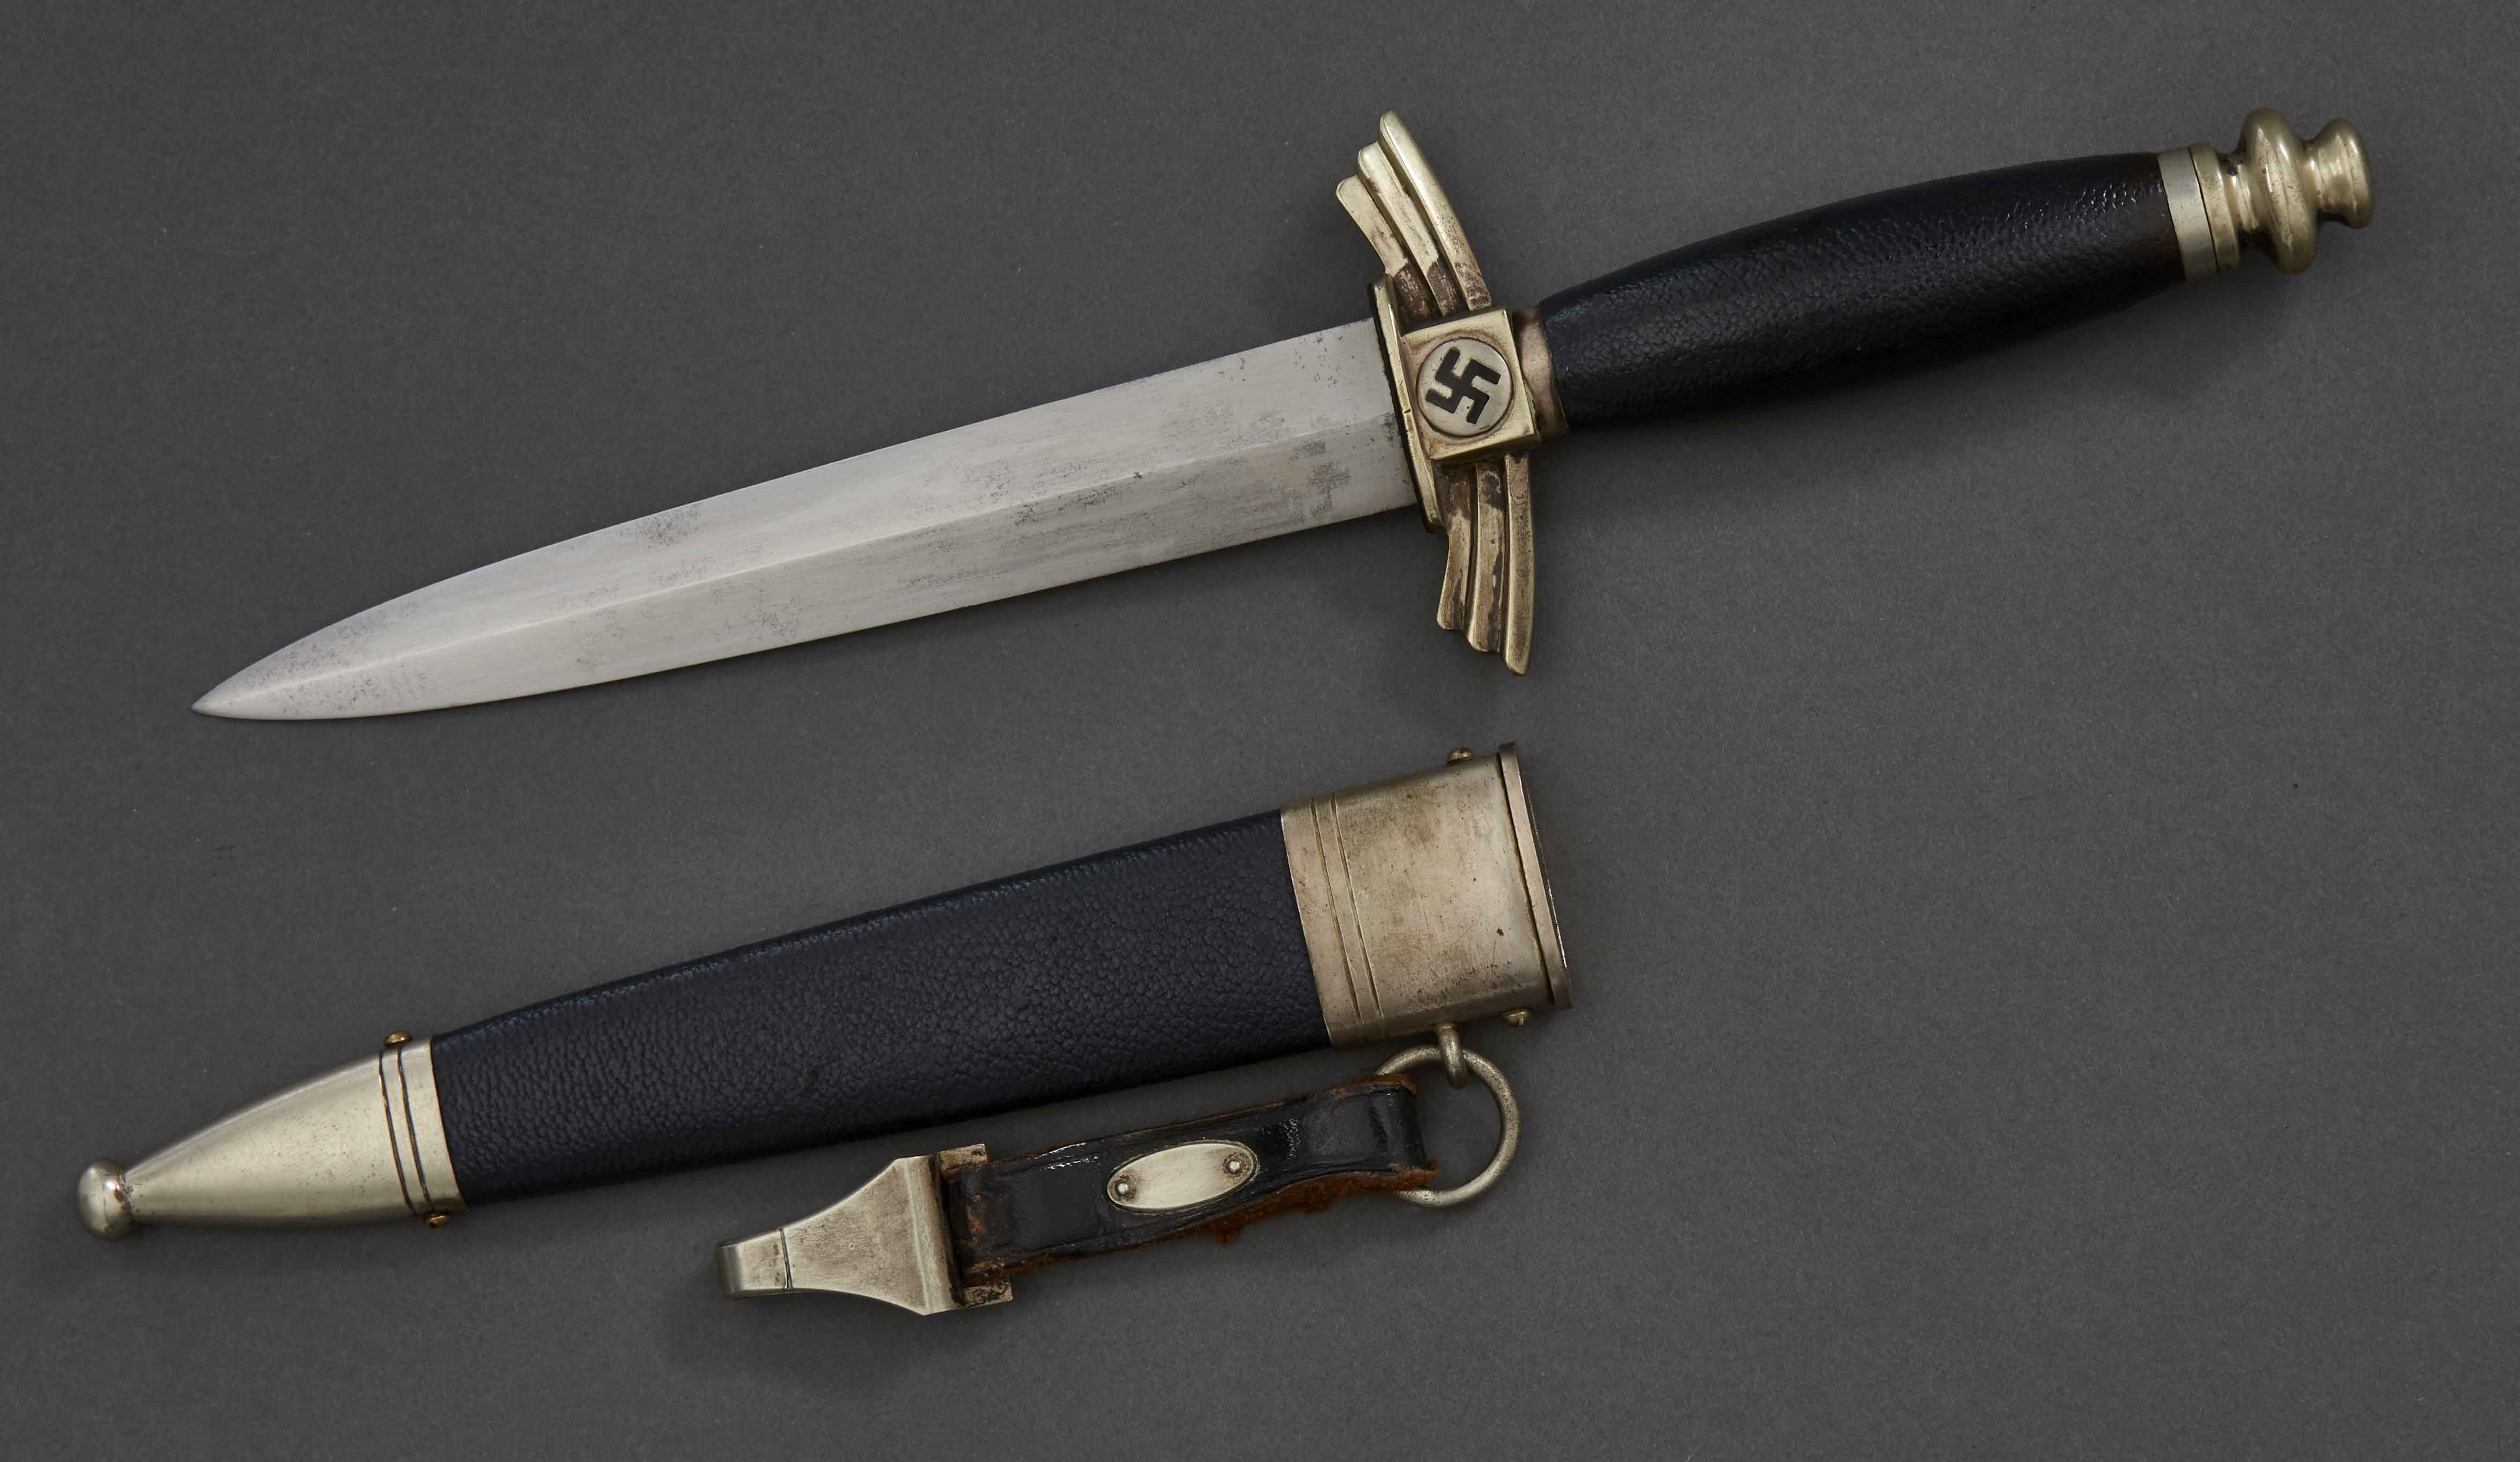 DLV service dagger (flyer’s knife)